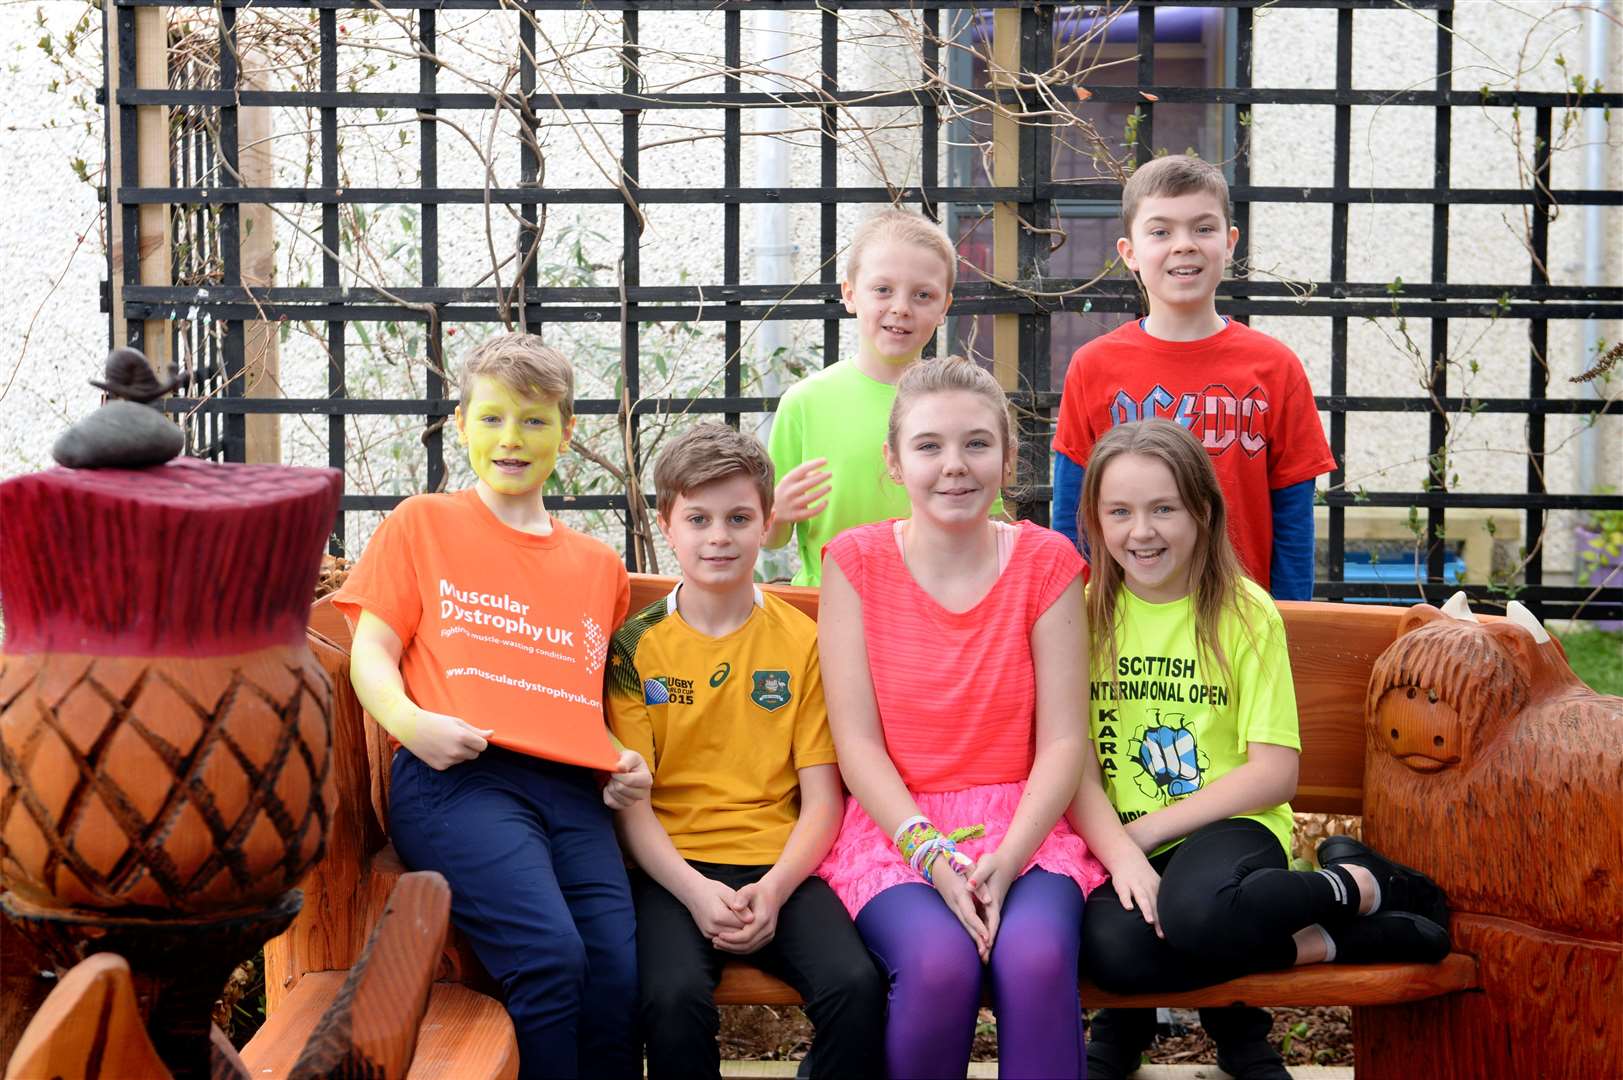 Children at Duncan Forbes Primary also got involved in fundraising: Will McGregor (9), Aidan Fraser (9), Harry Gallacher (11), Joshua Farley (11), Ava Graham (11), Cara Petrie (11).